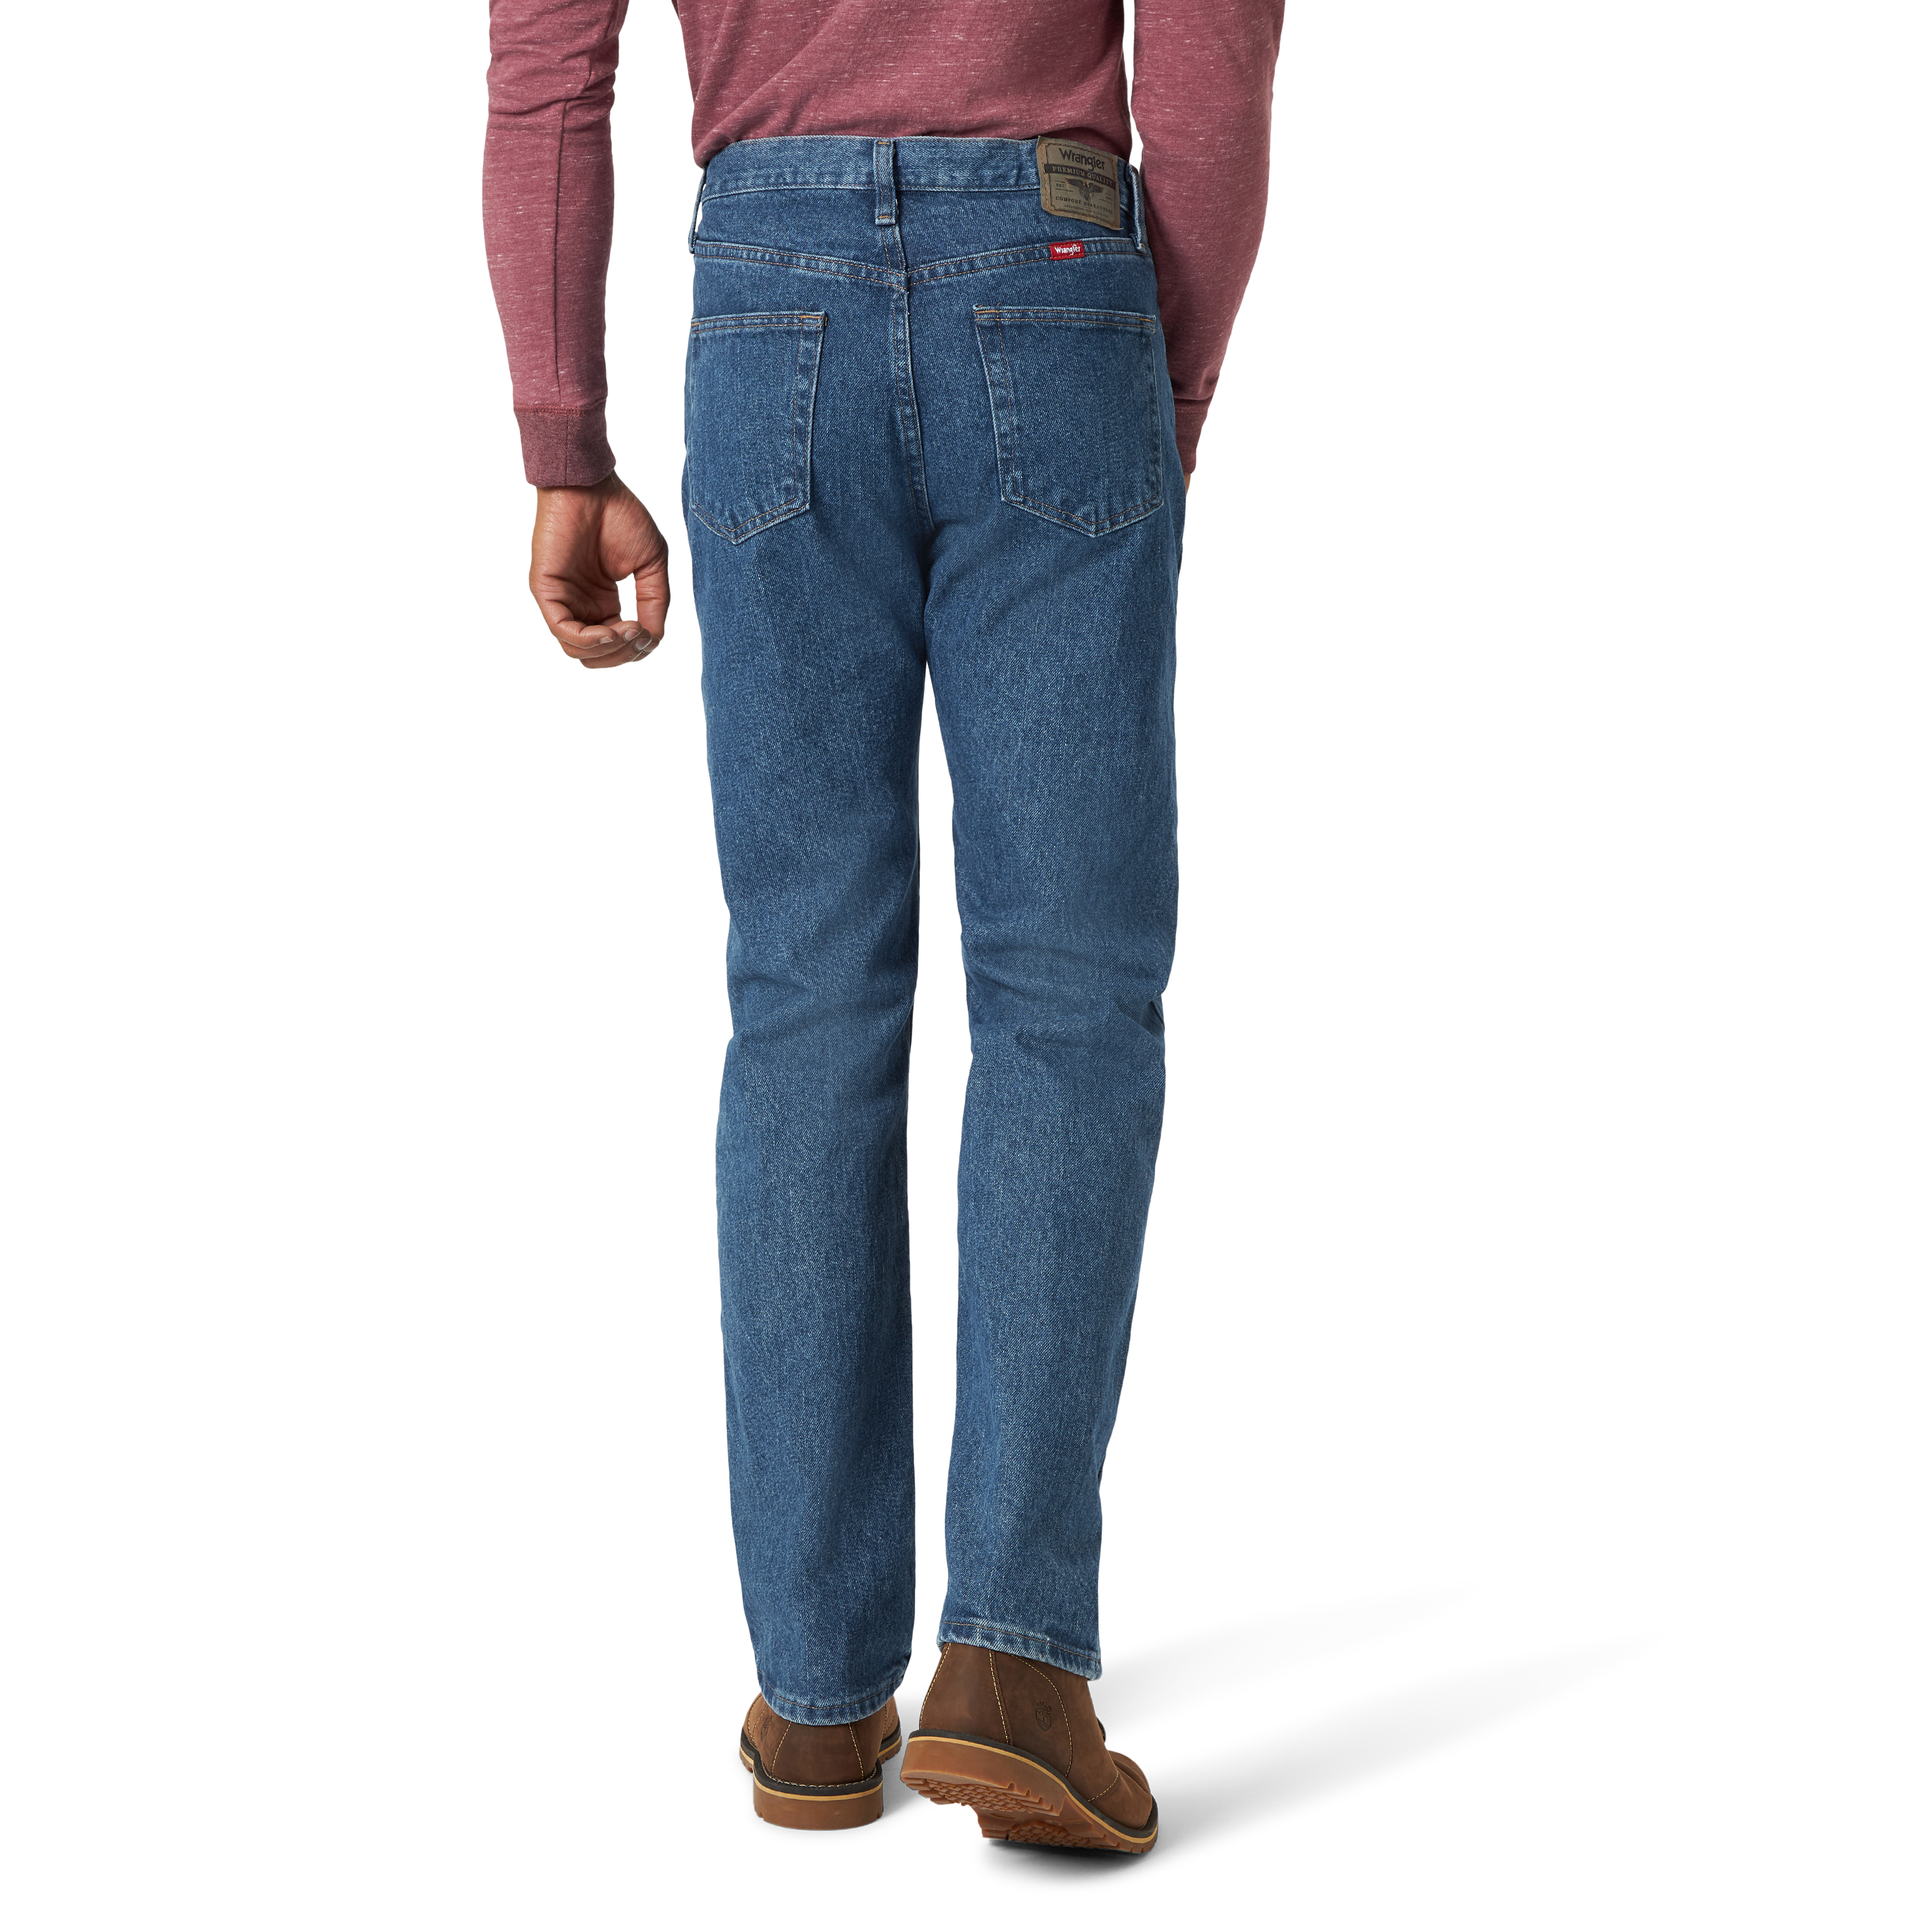 Wrangler Men's and Big Men's Regular Fit Jeans - image 4 of 6